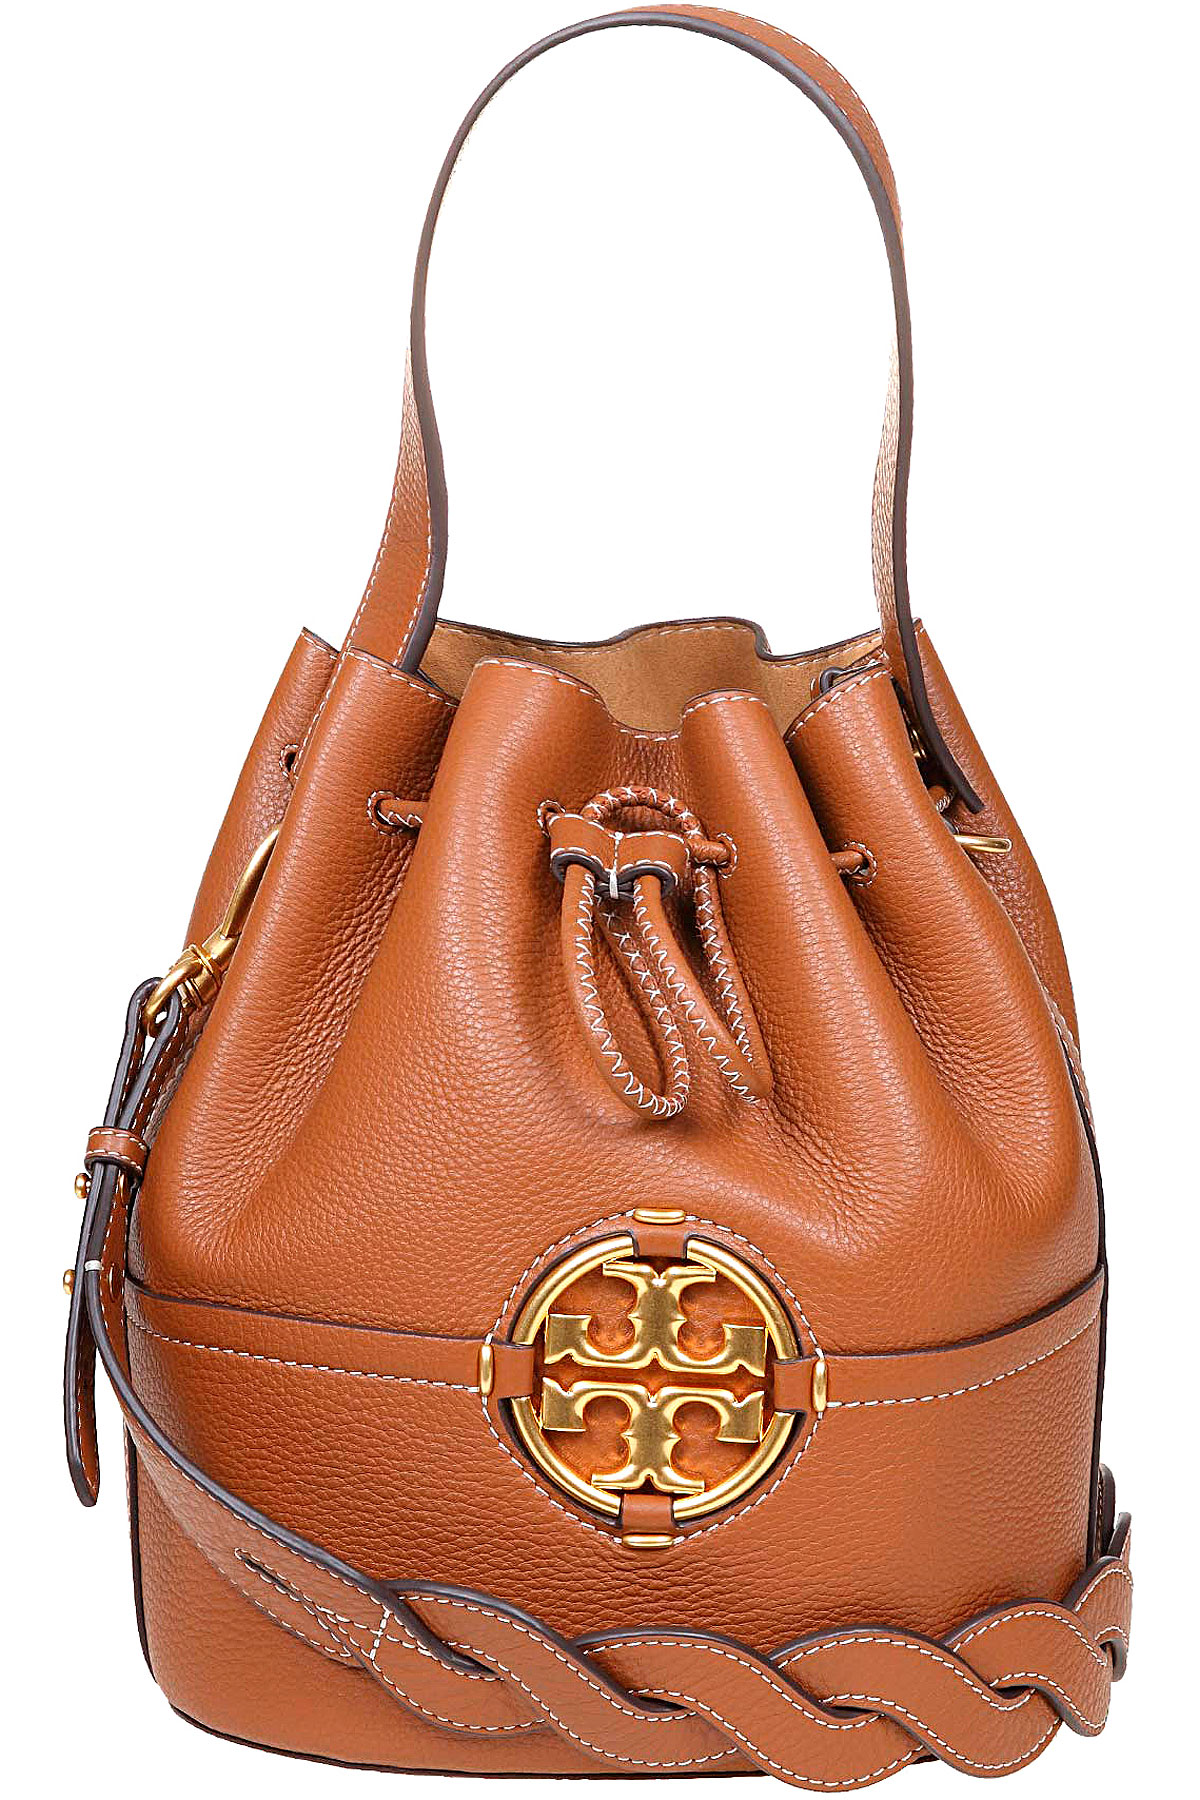 Handbags Tory Burch, Style code 79323905